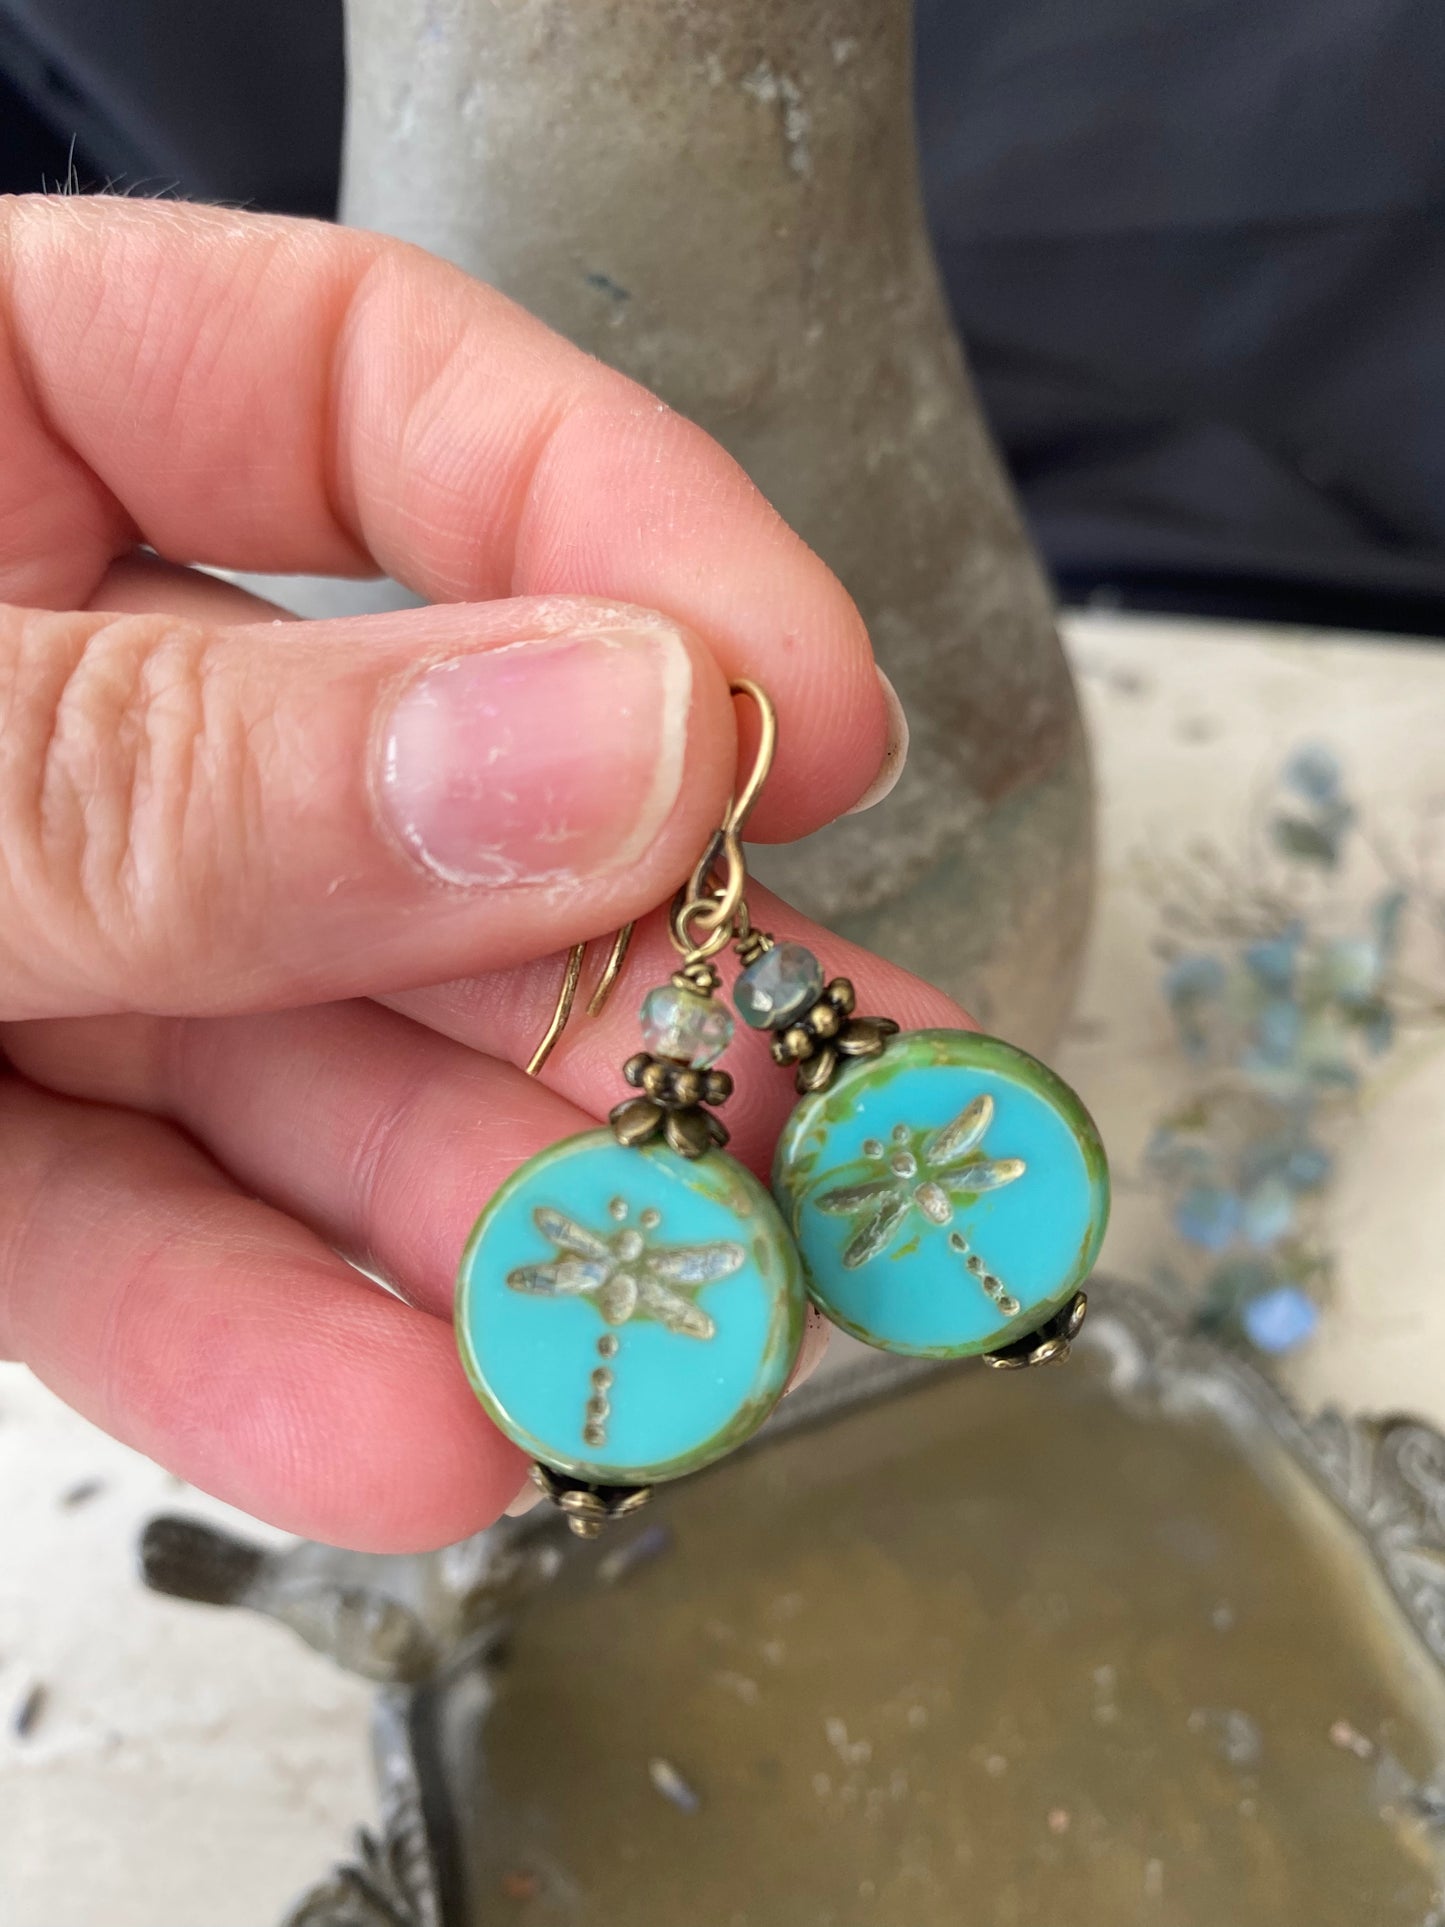 Dragonfly teal Czech glass, bronze metal, earrings.